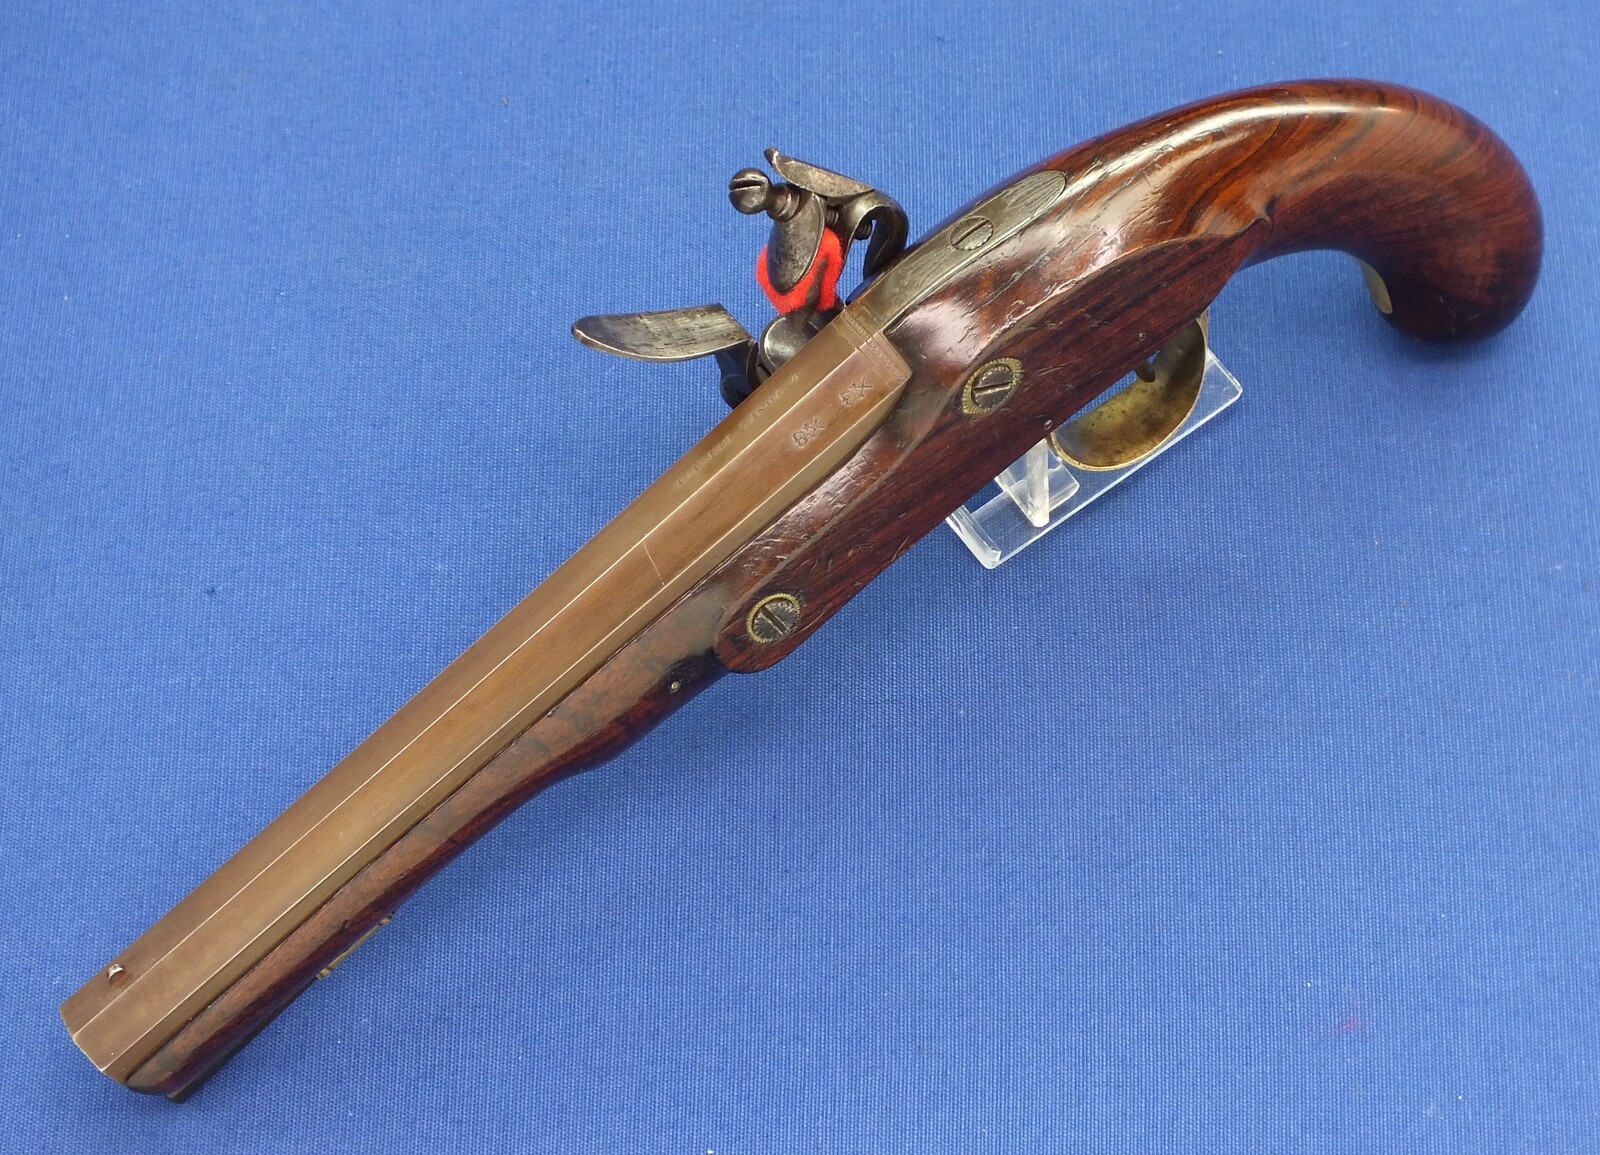 A fine antique 18th century English Flintlock Pistol signed G.Jones Bristol, caliber 15 mm, length 35 cm, in very good condition. Price 2.975 euro